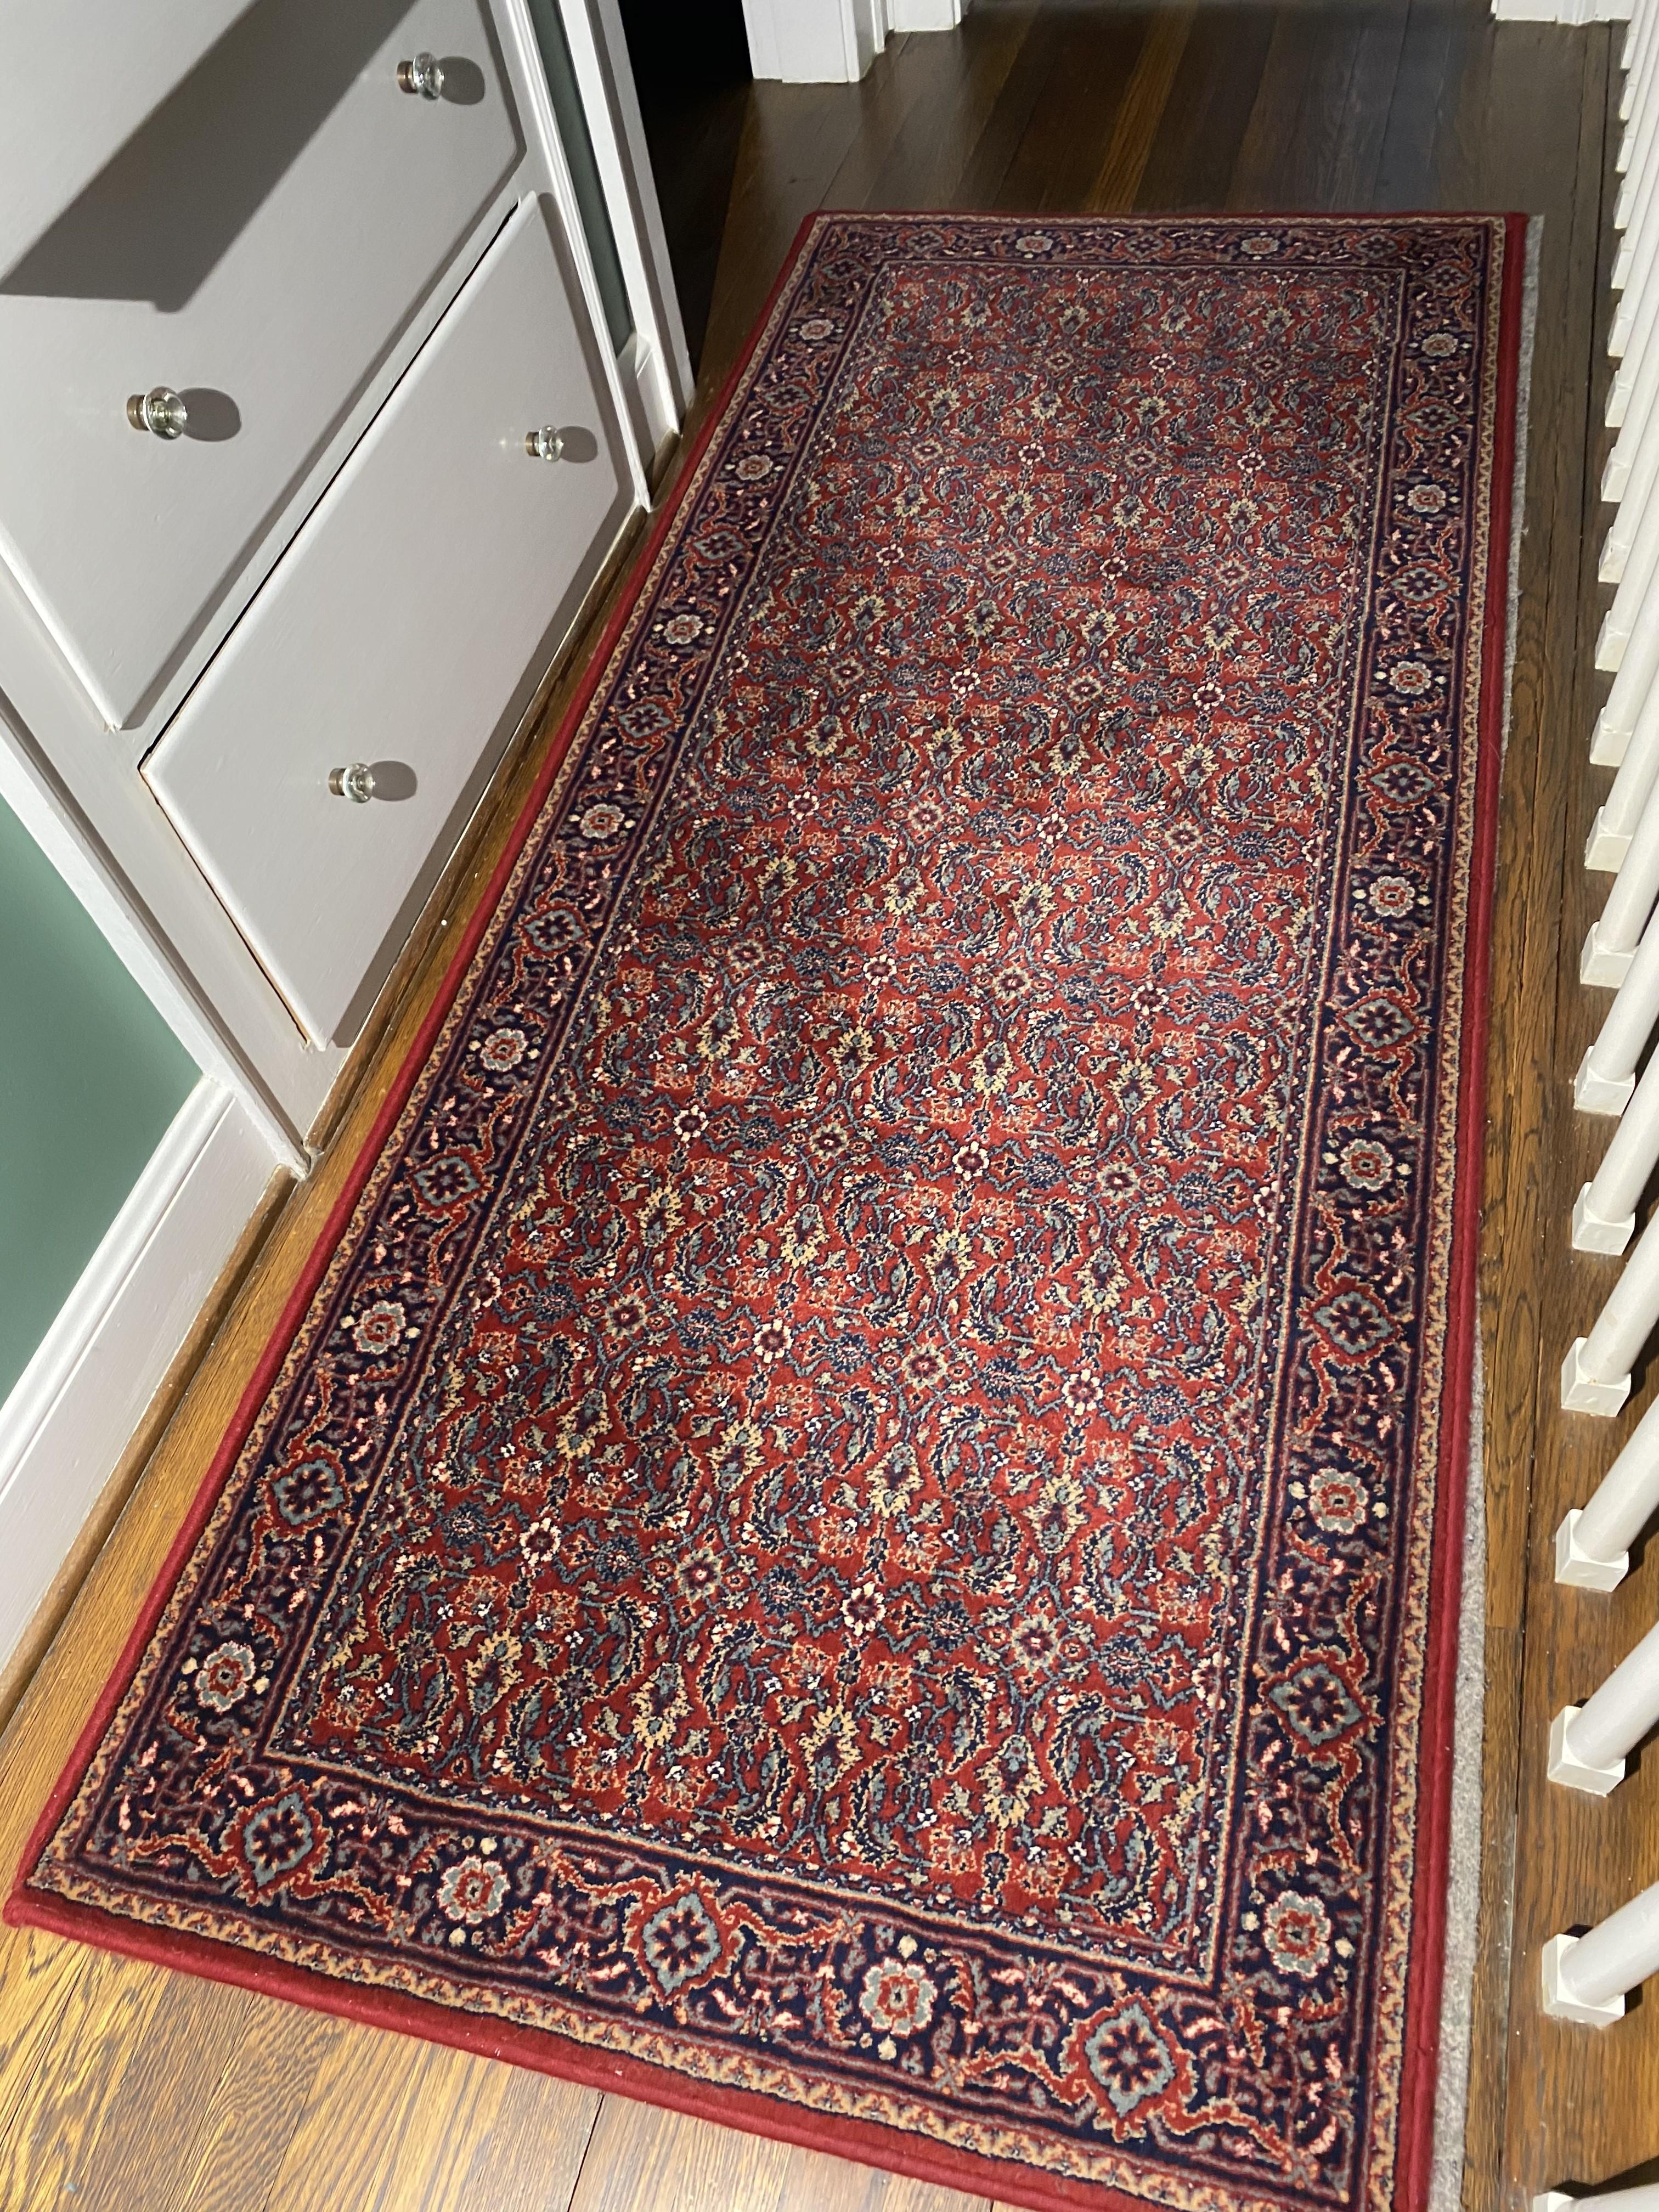 Two nice long hall rugs